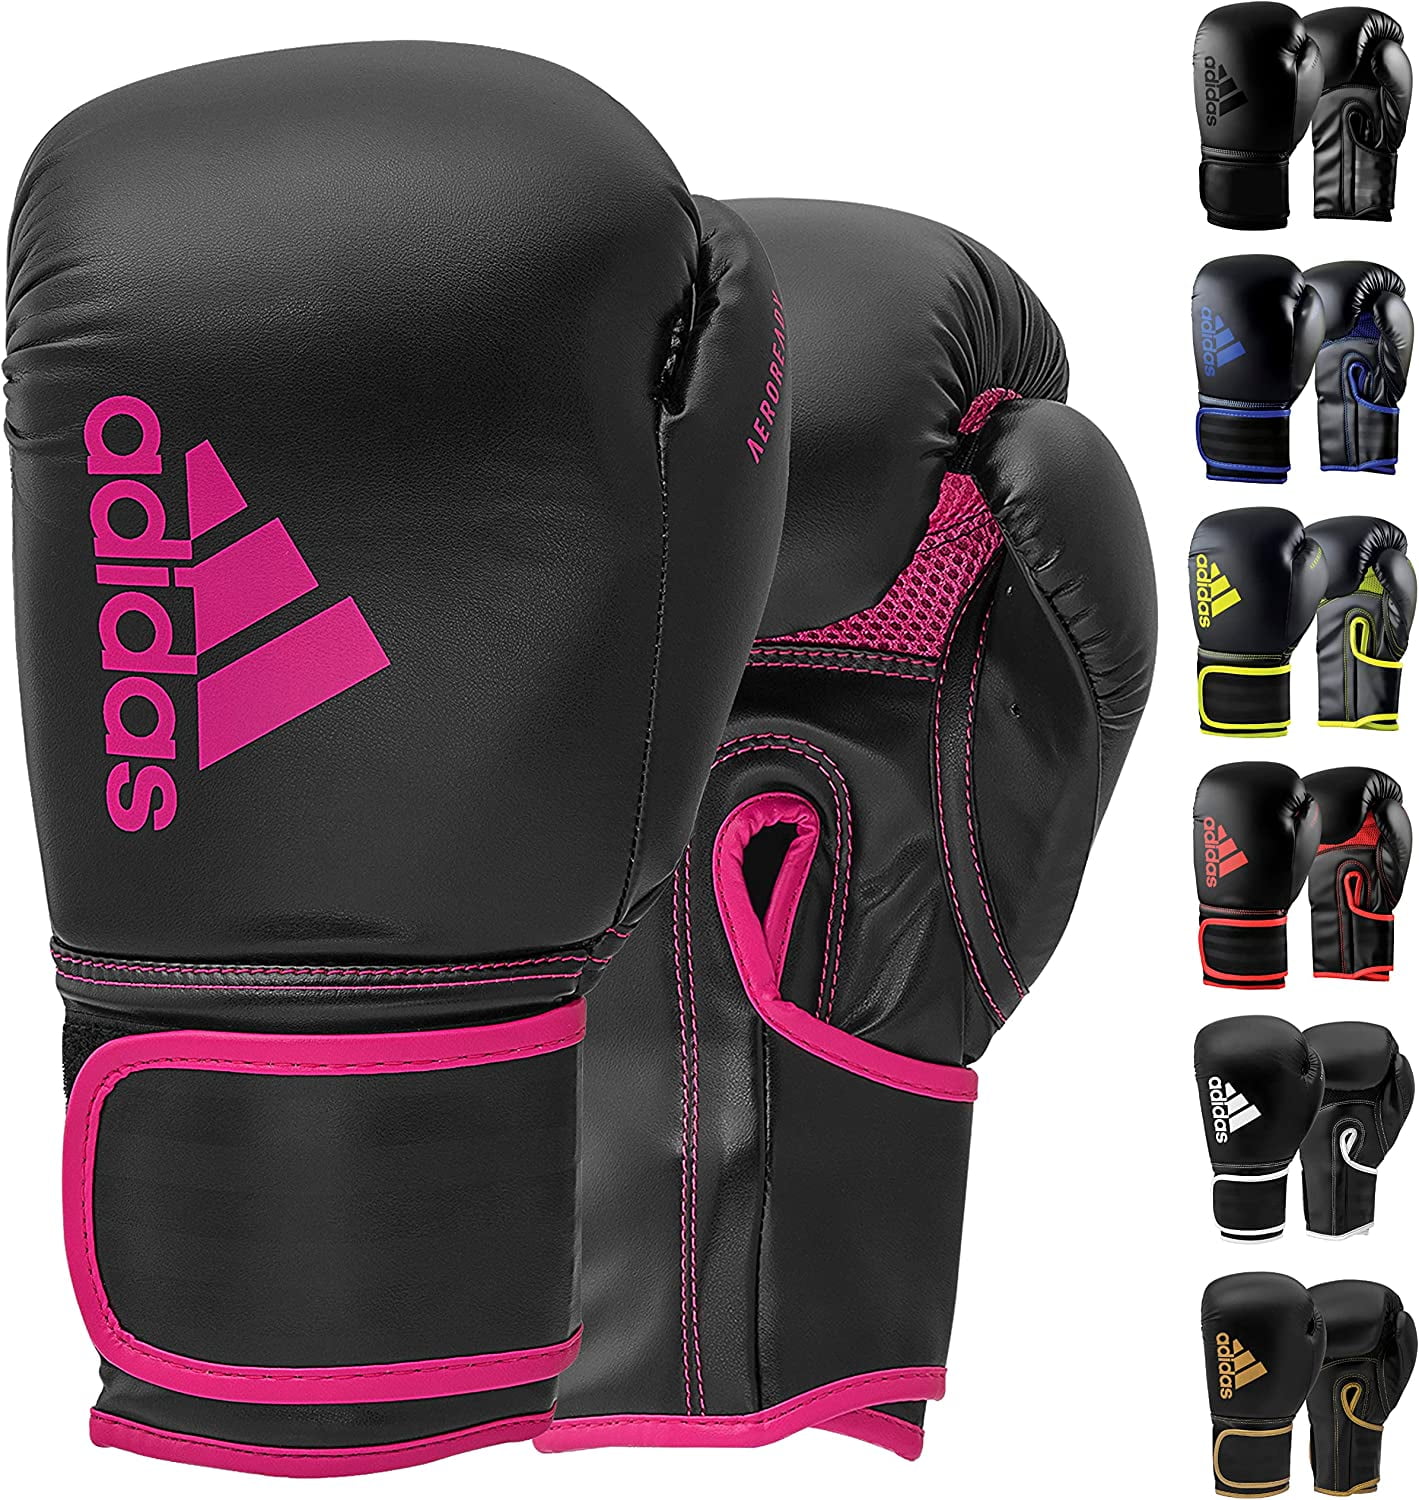 Adidas Hybrid 80 Boxing Gloves, pair set - Training Gloves for Kickboxing -  Sparring Gloves for Men, Women and Kids - Blac/Pink, 8oz